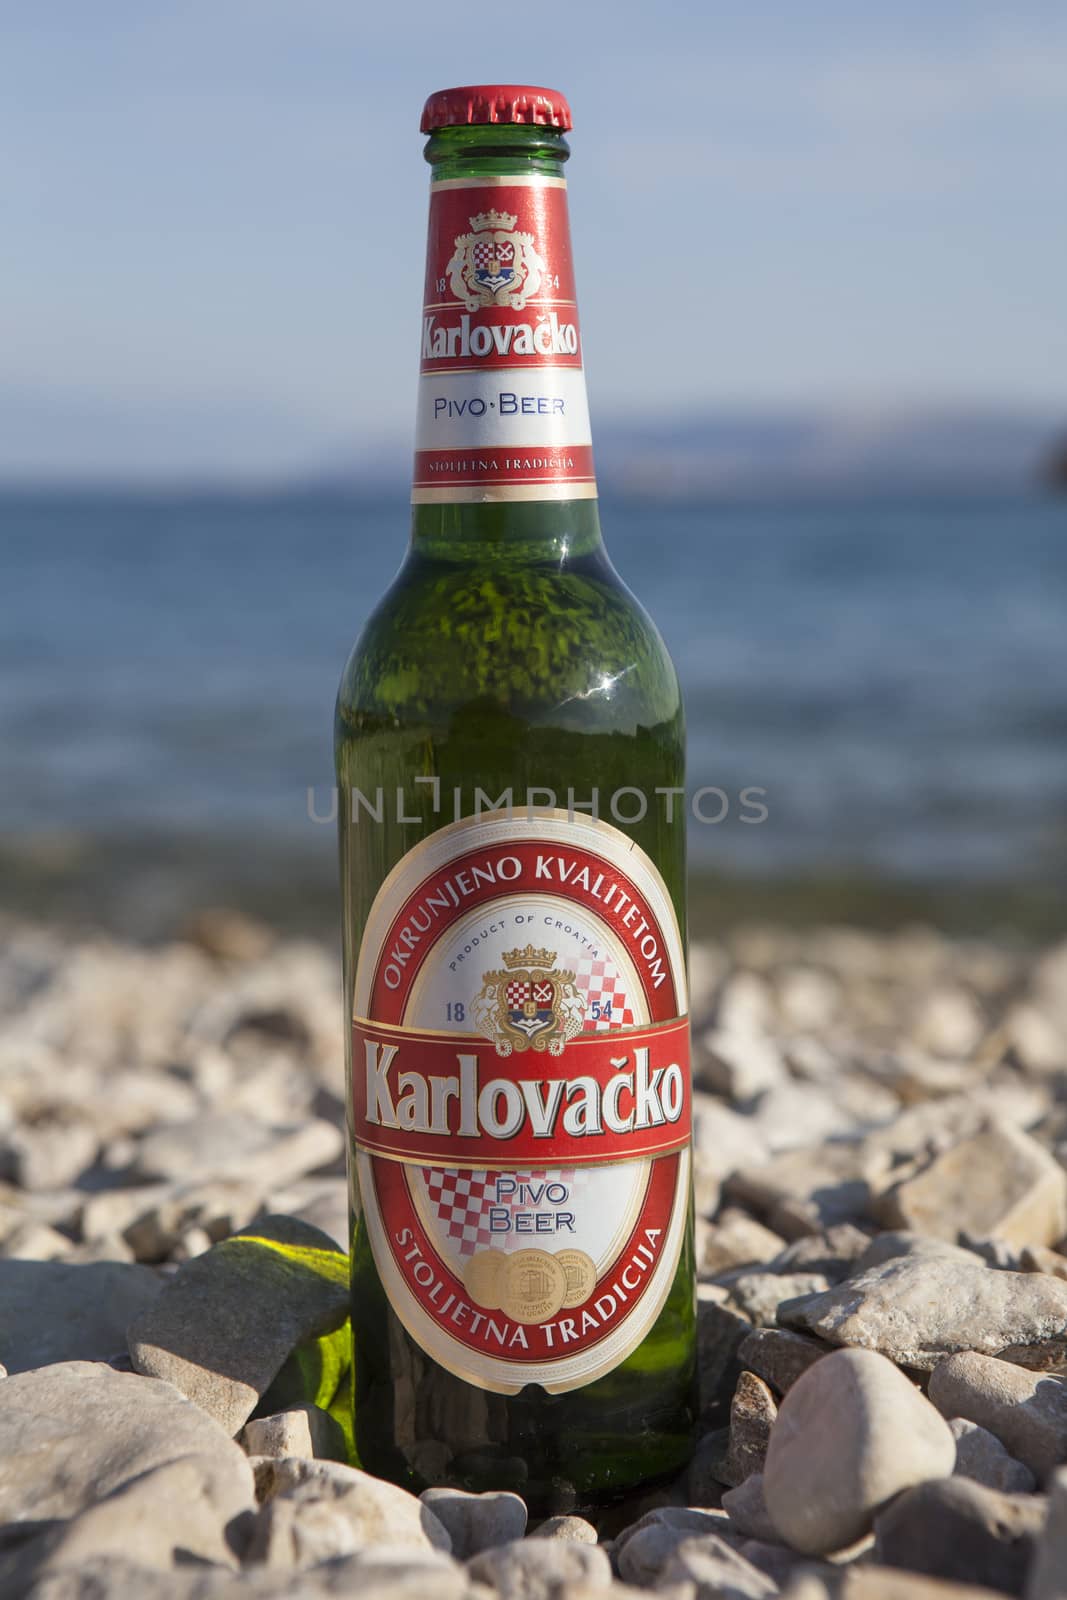 Crikvenica, Croatia – August 10, 2012: Bottle of Karlovačko, popular Croatian beer, on a pebbled beach.